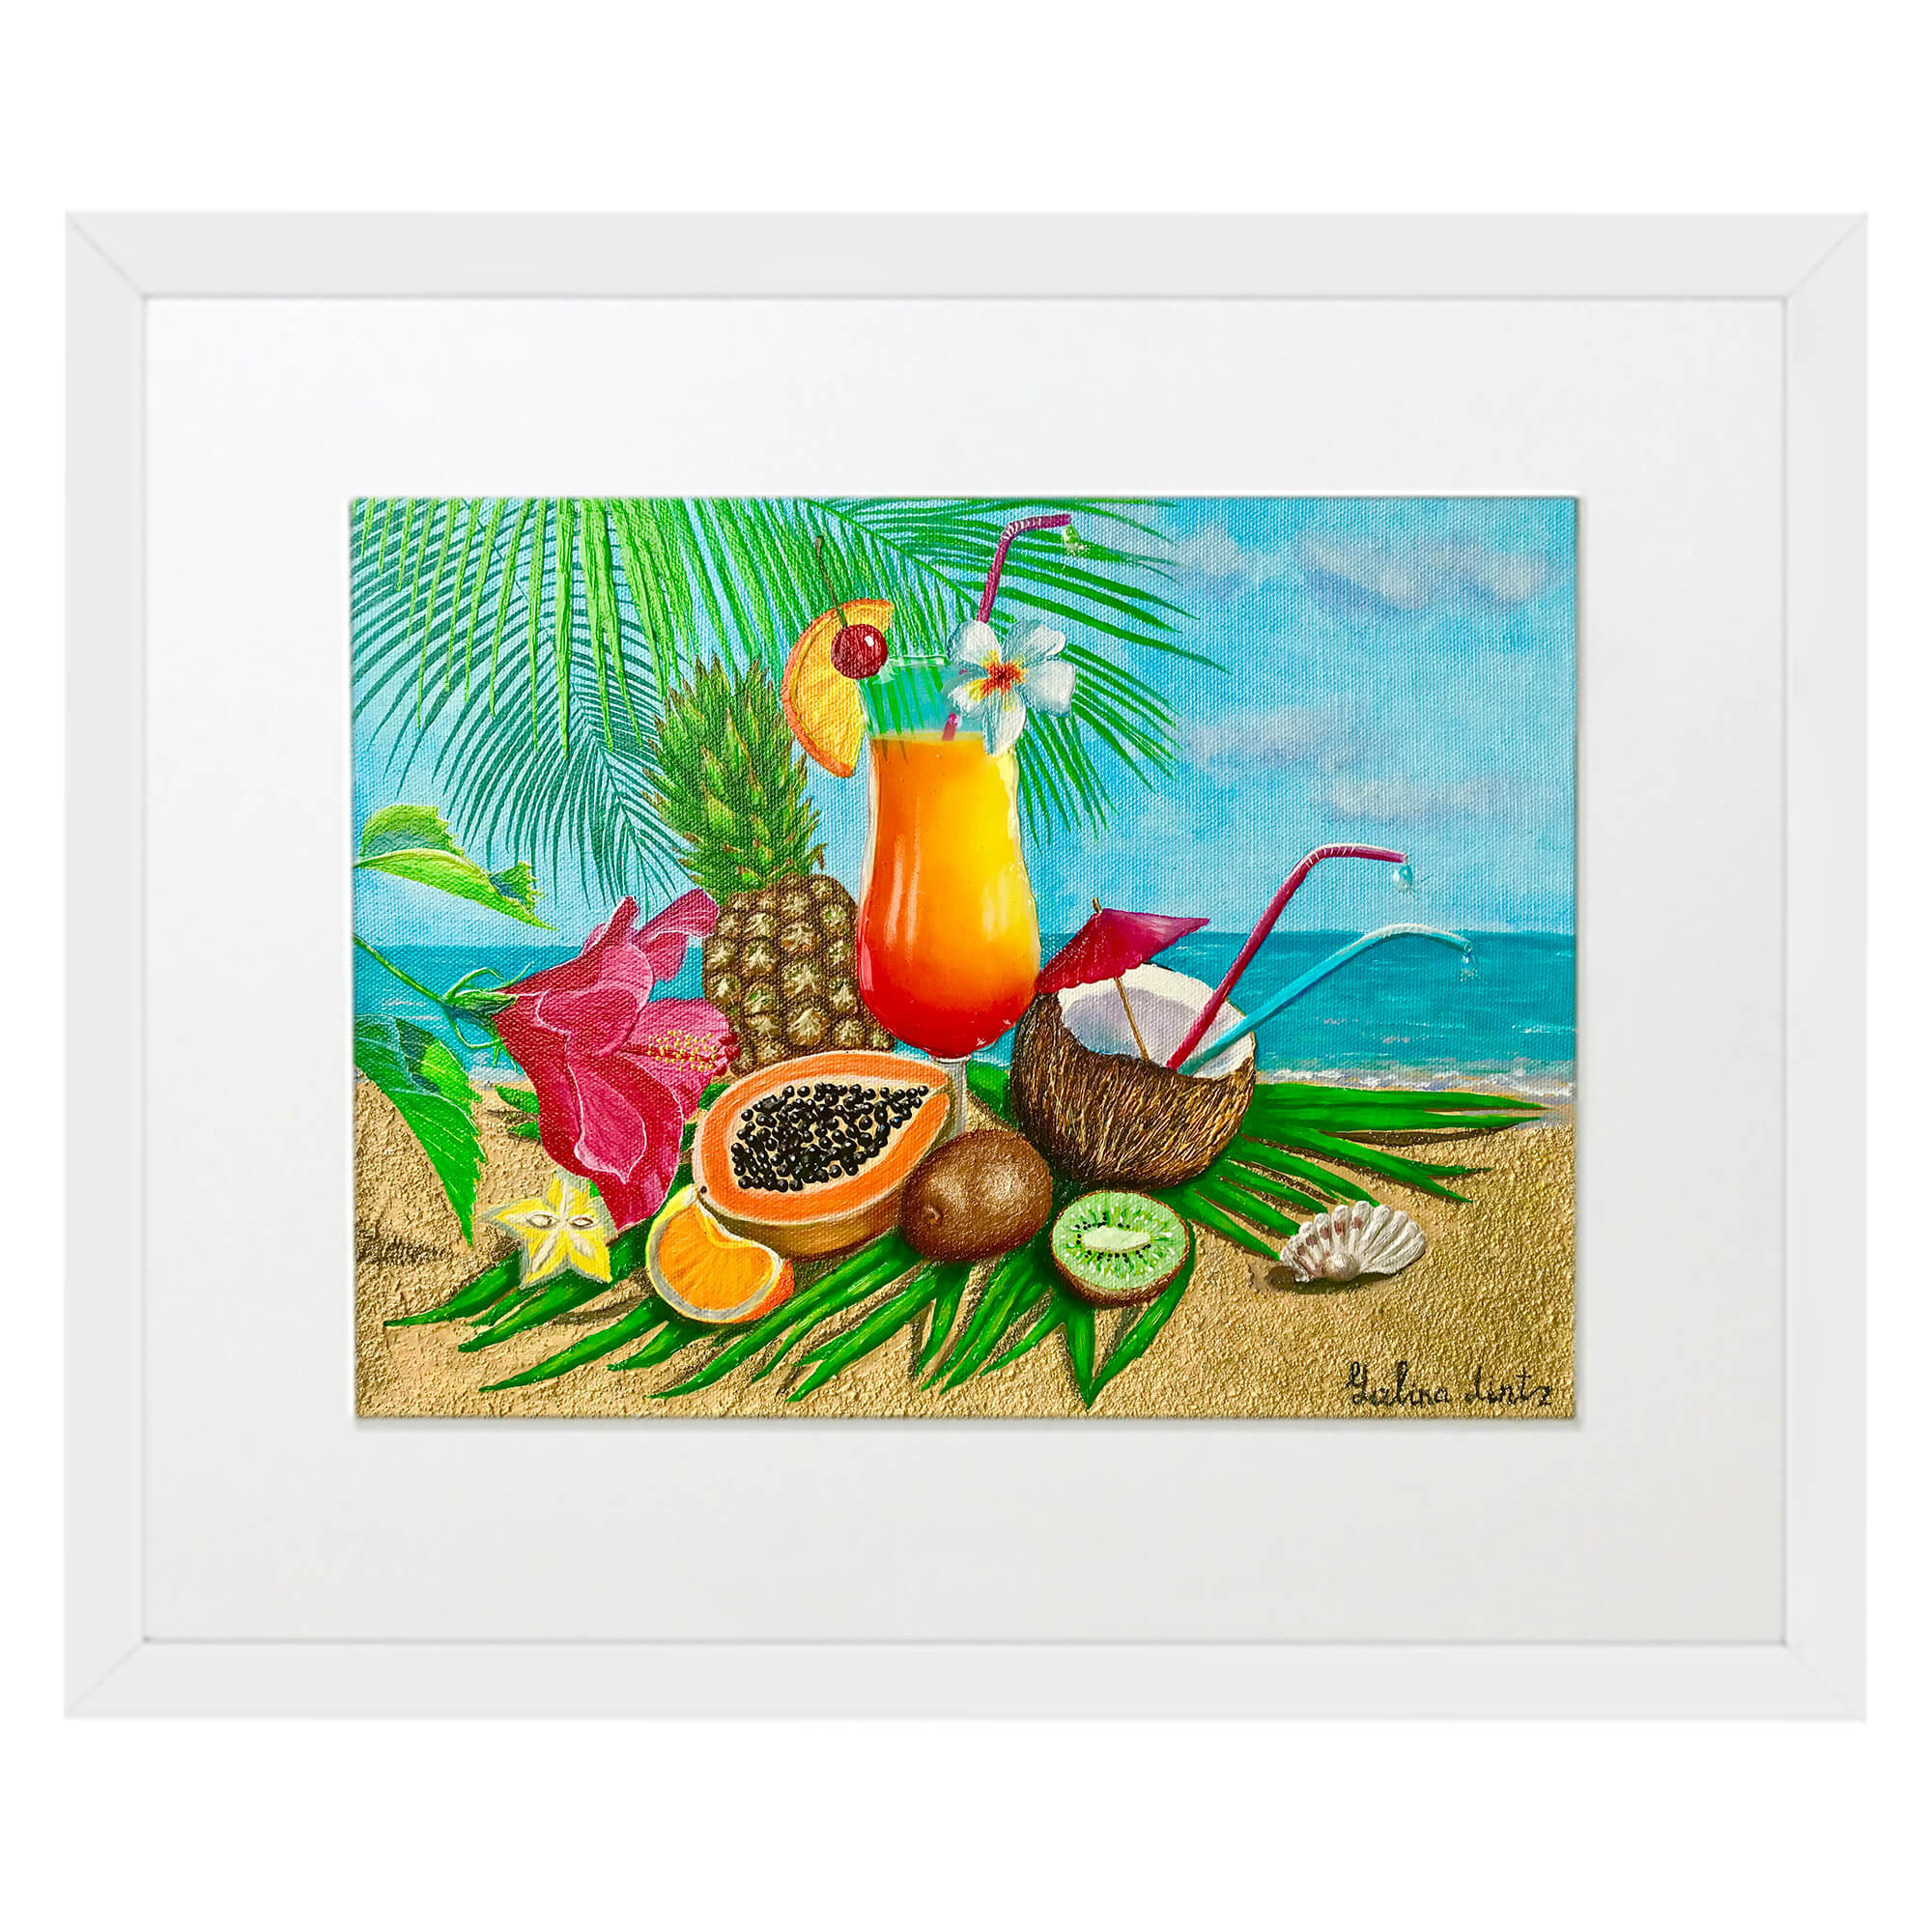 Matted art print with white frame showcasing a papaya by hawaii artist Galina Lintz